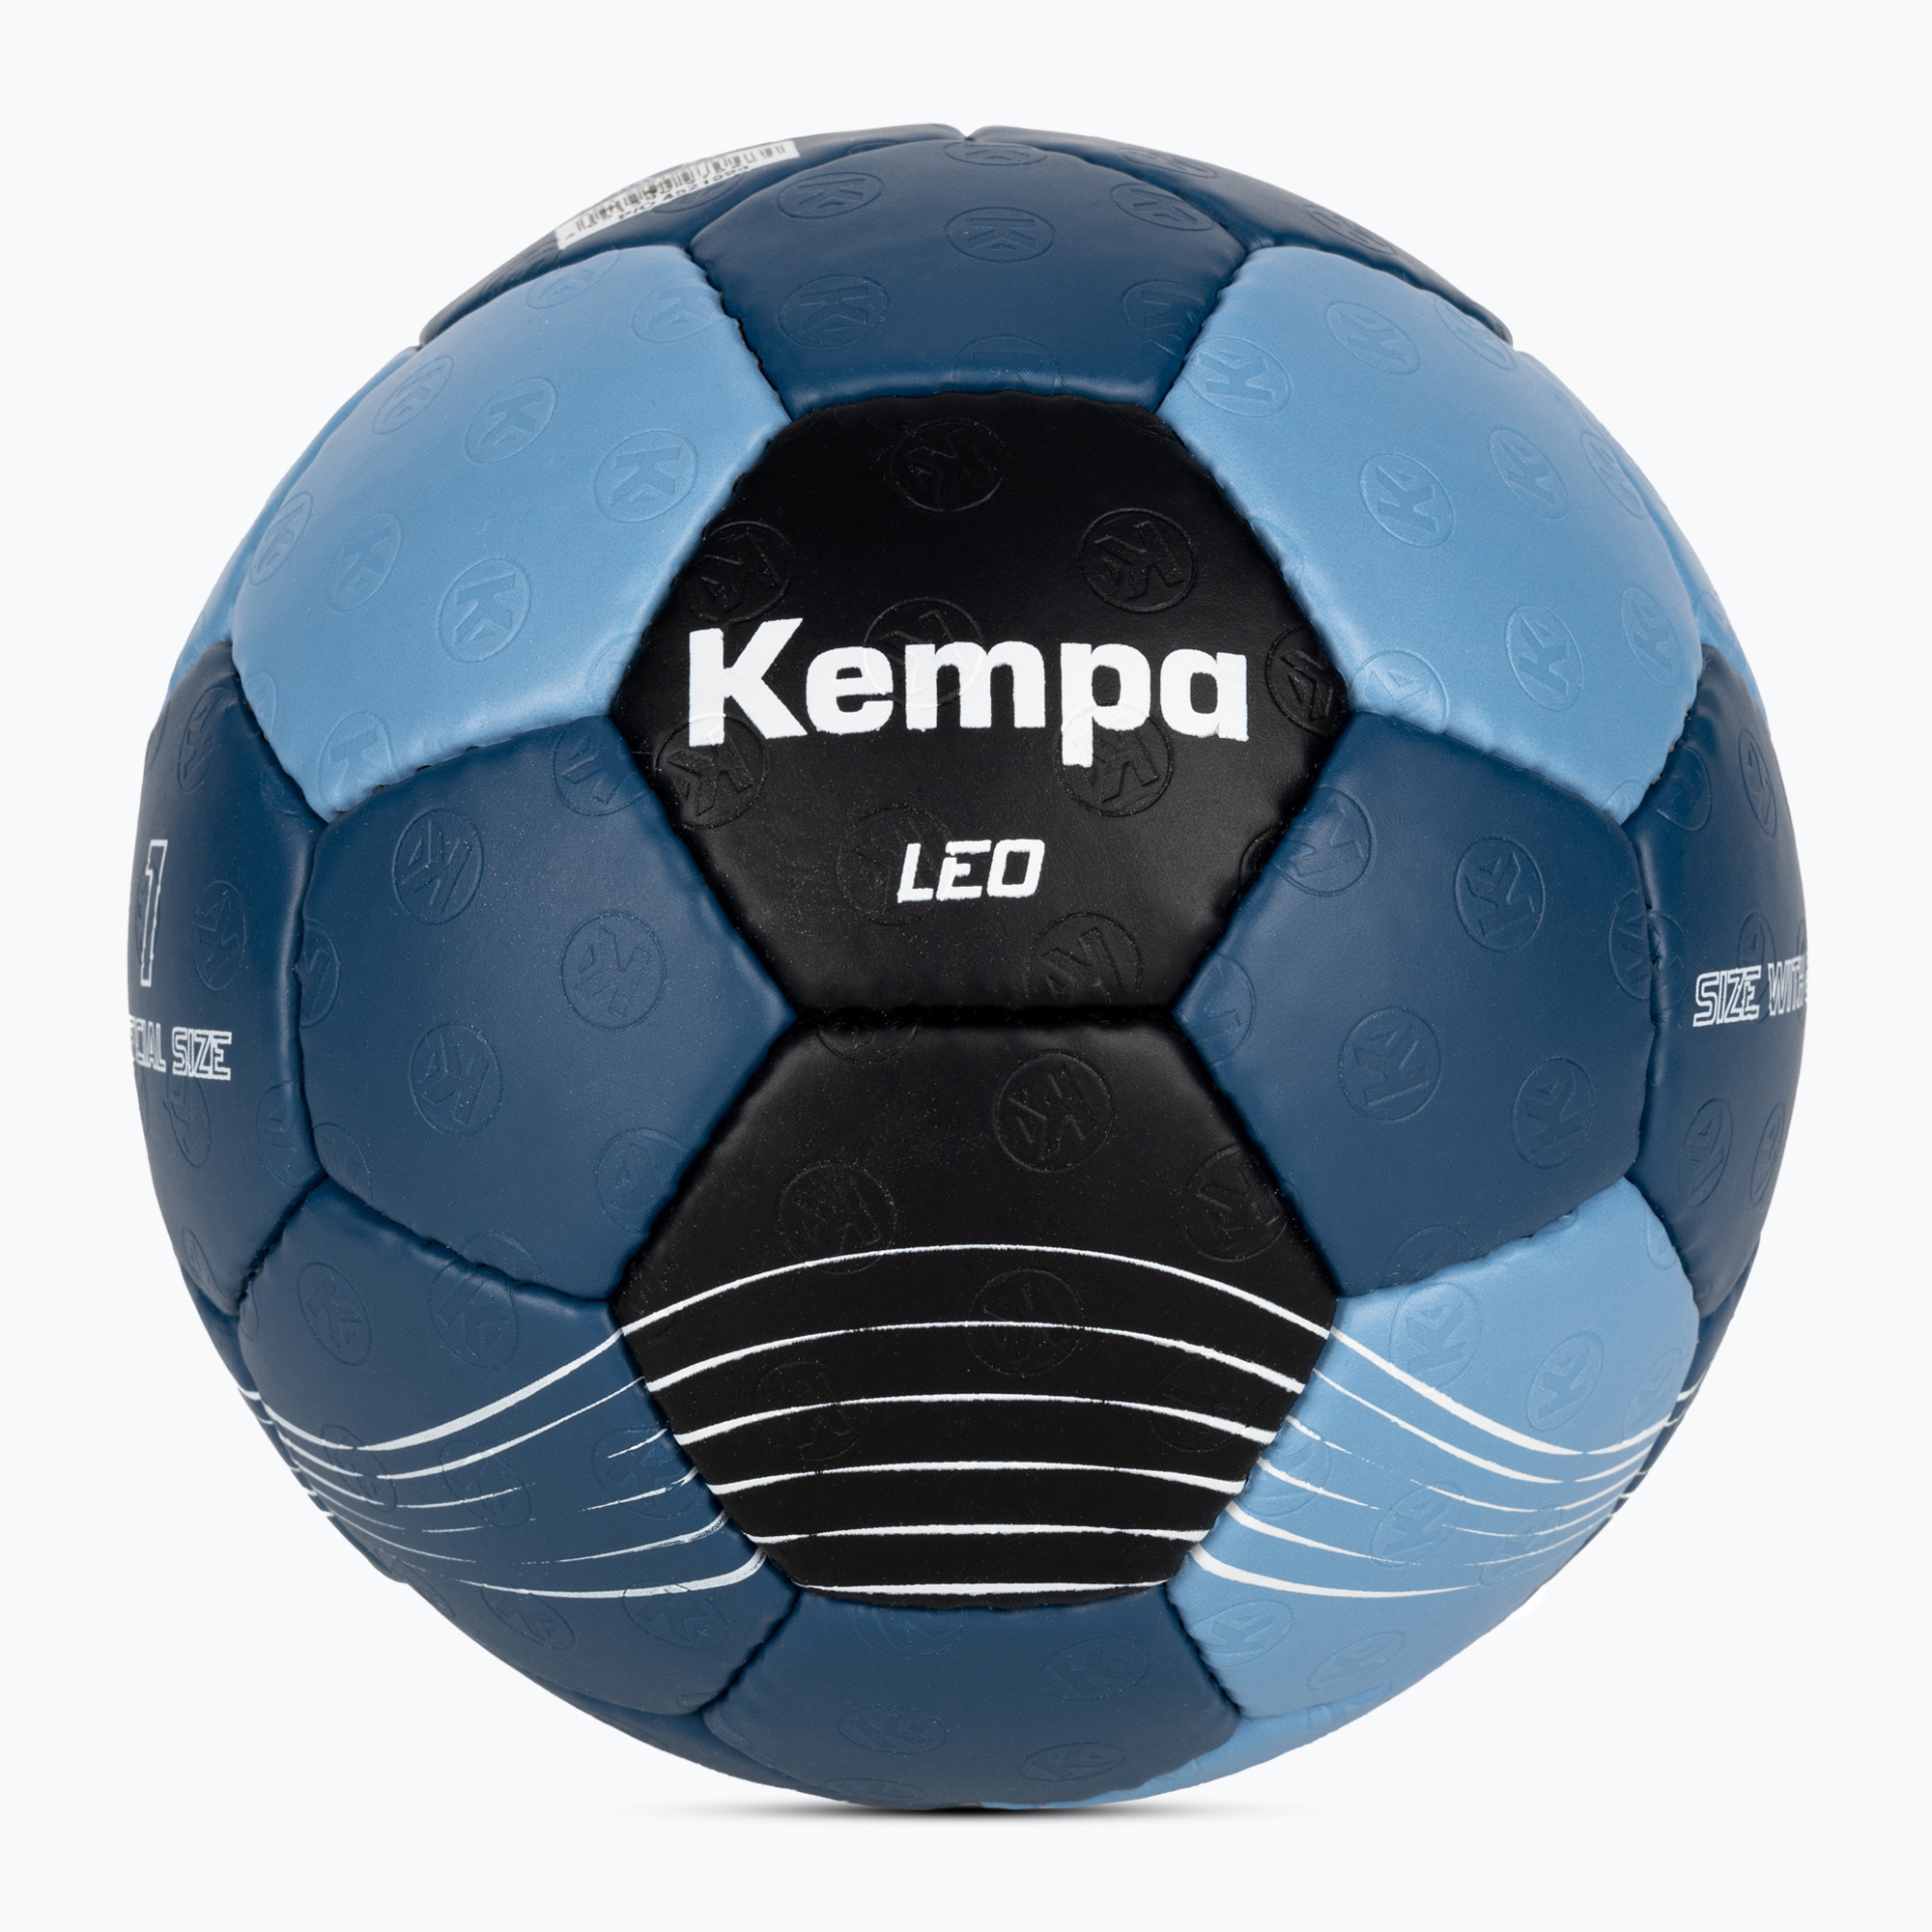 Kempa Leo handball 200190703/1 veľkosť 1